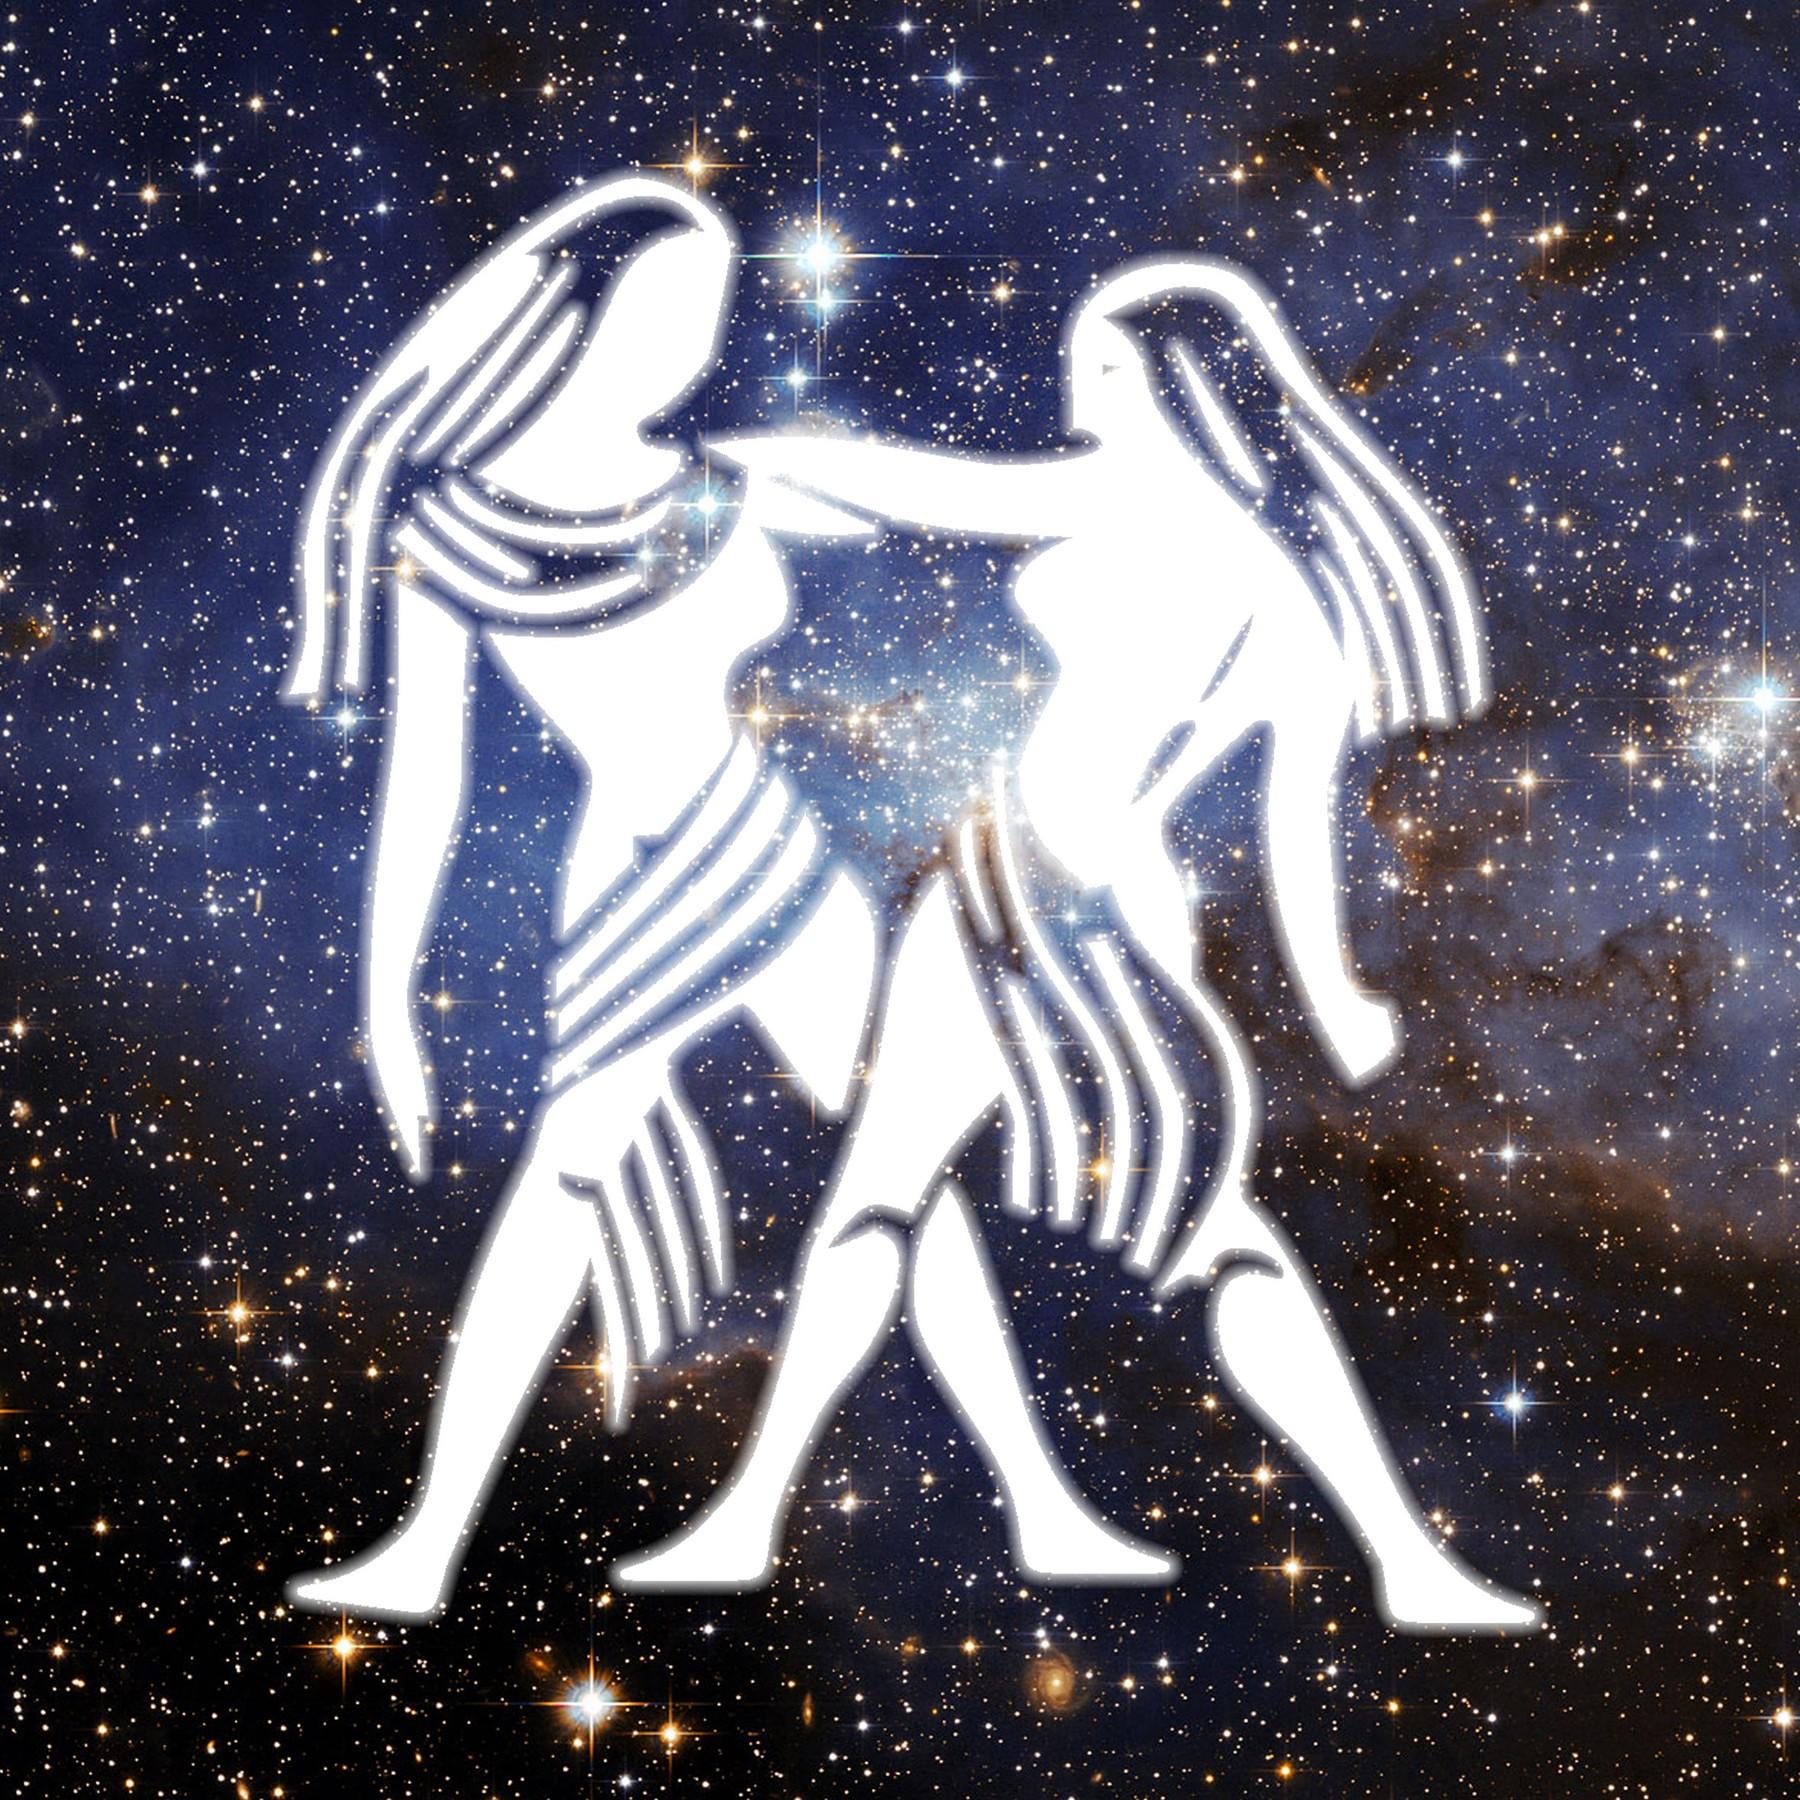 Ljubavni horoskop 2019 ovan upoznavanje srodne duse